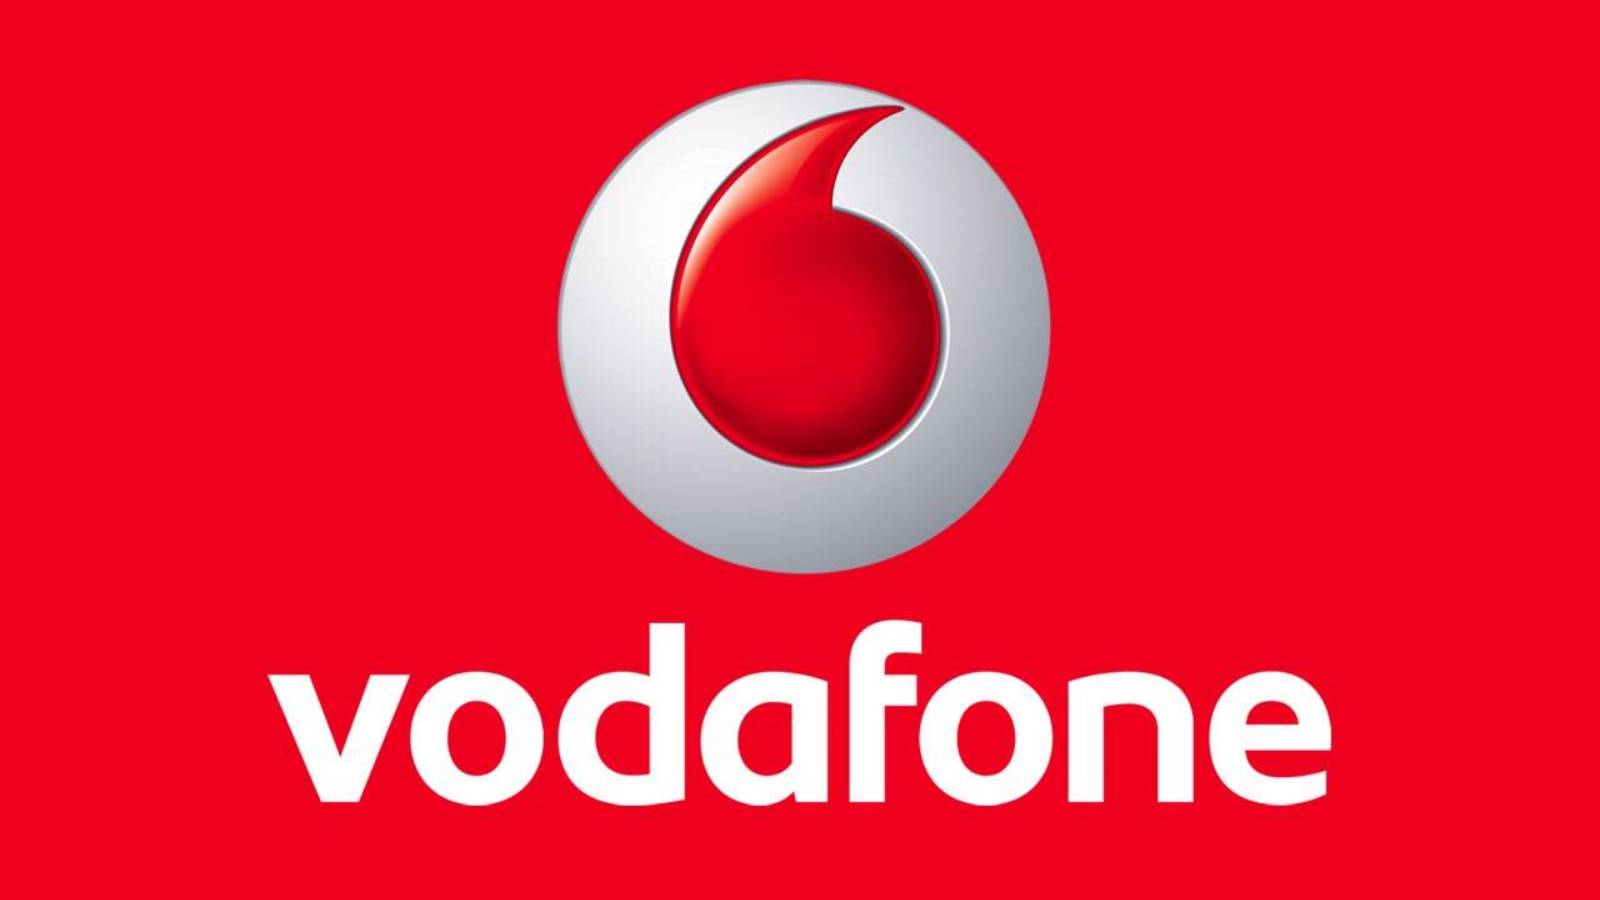 Vodafone champions